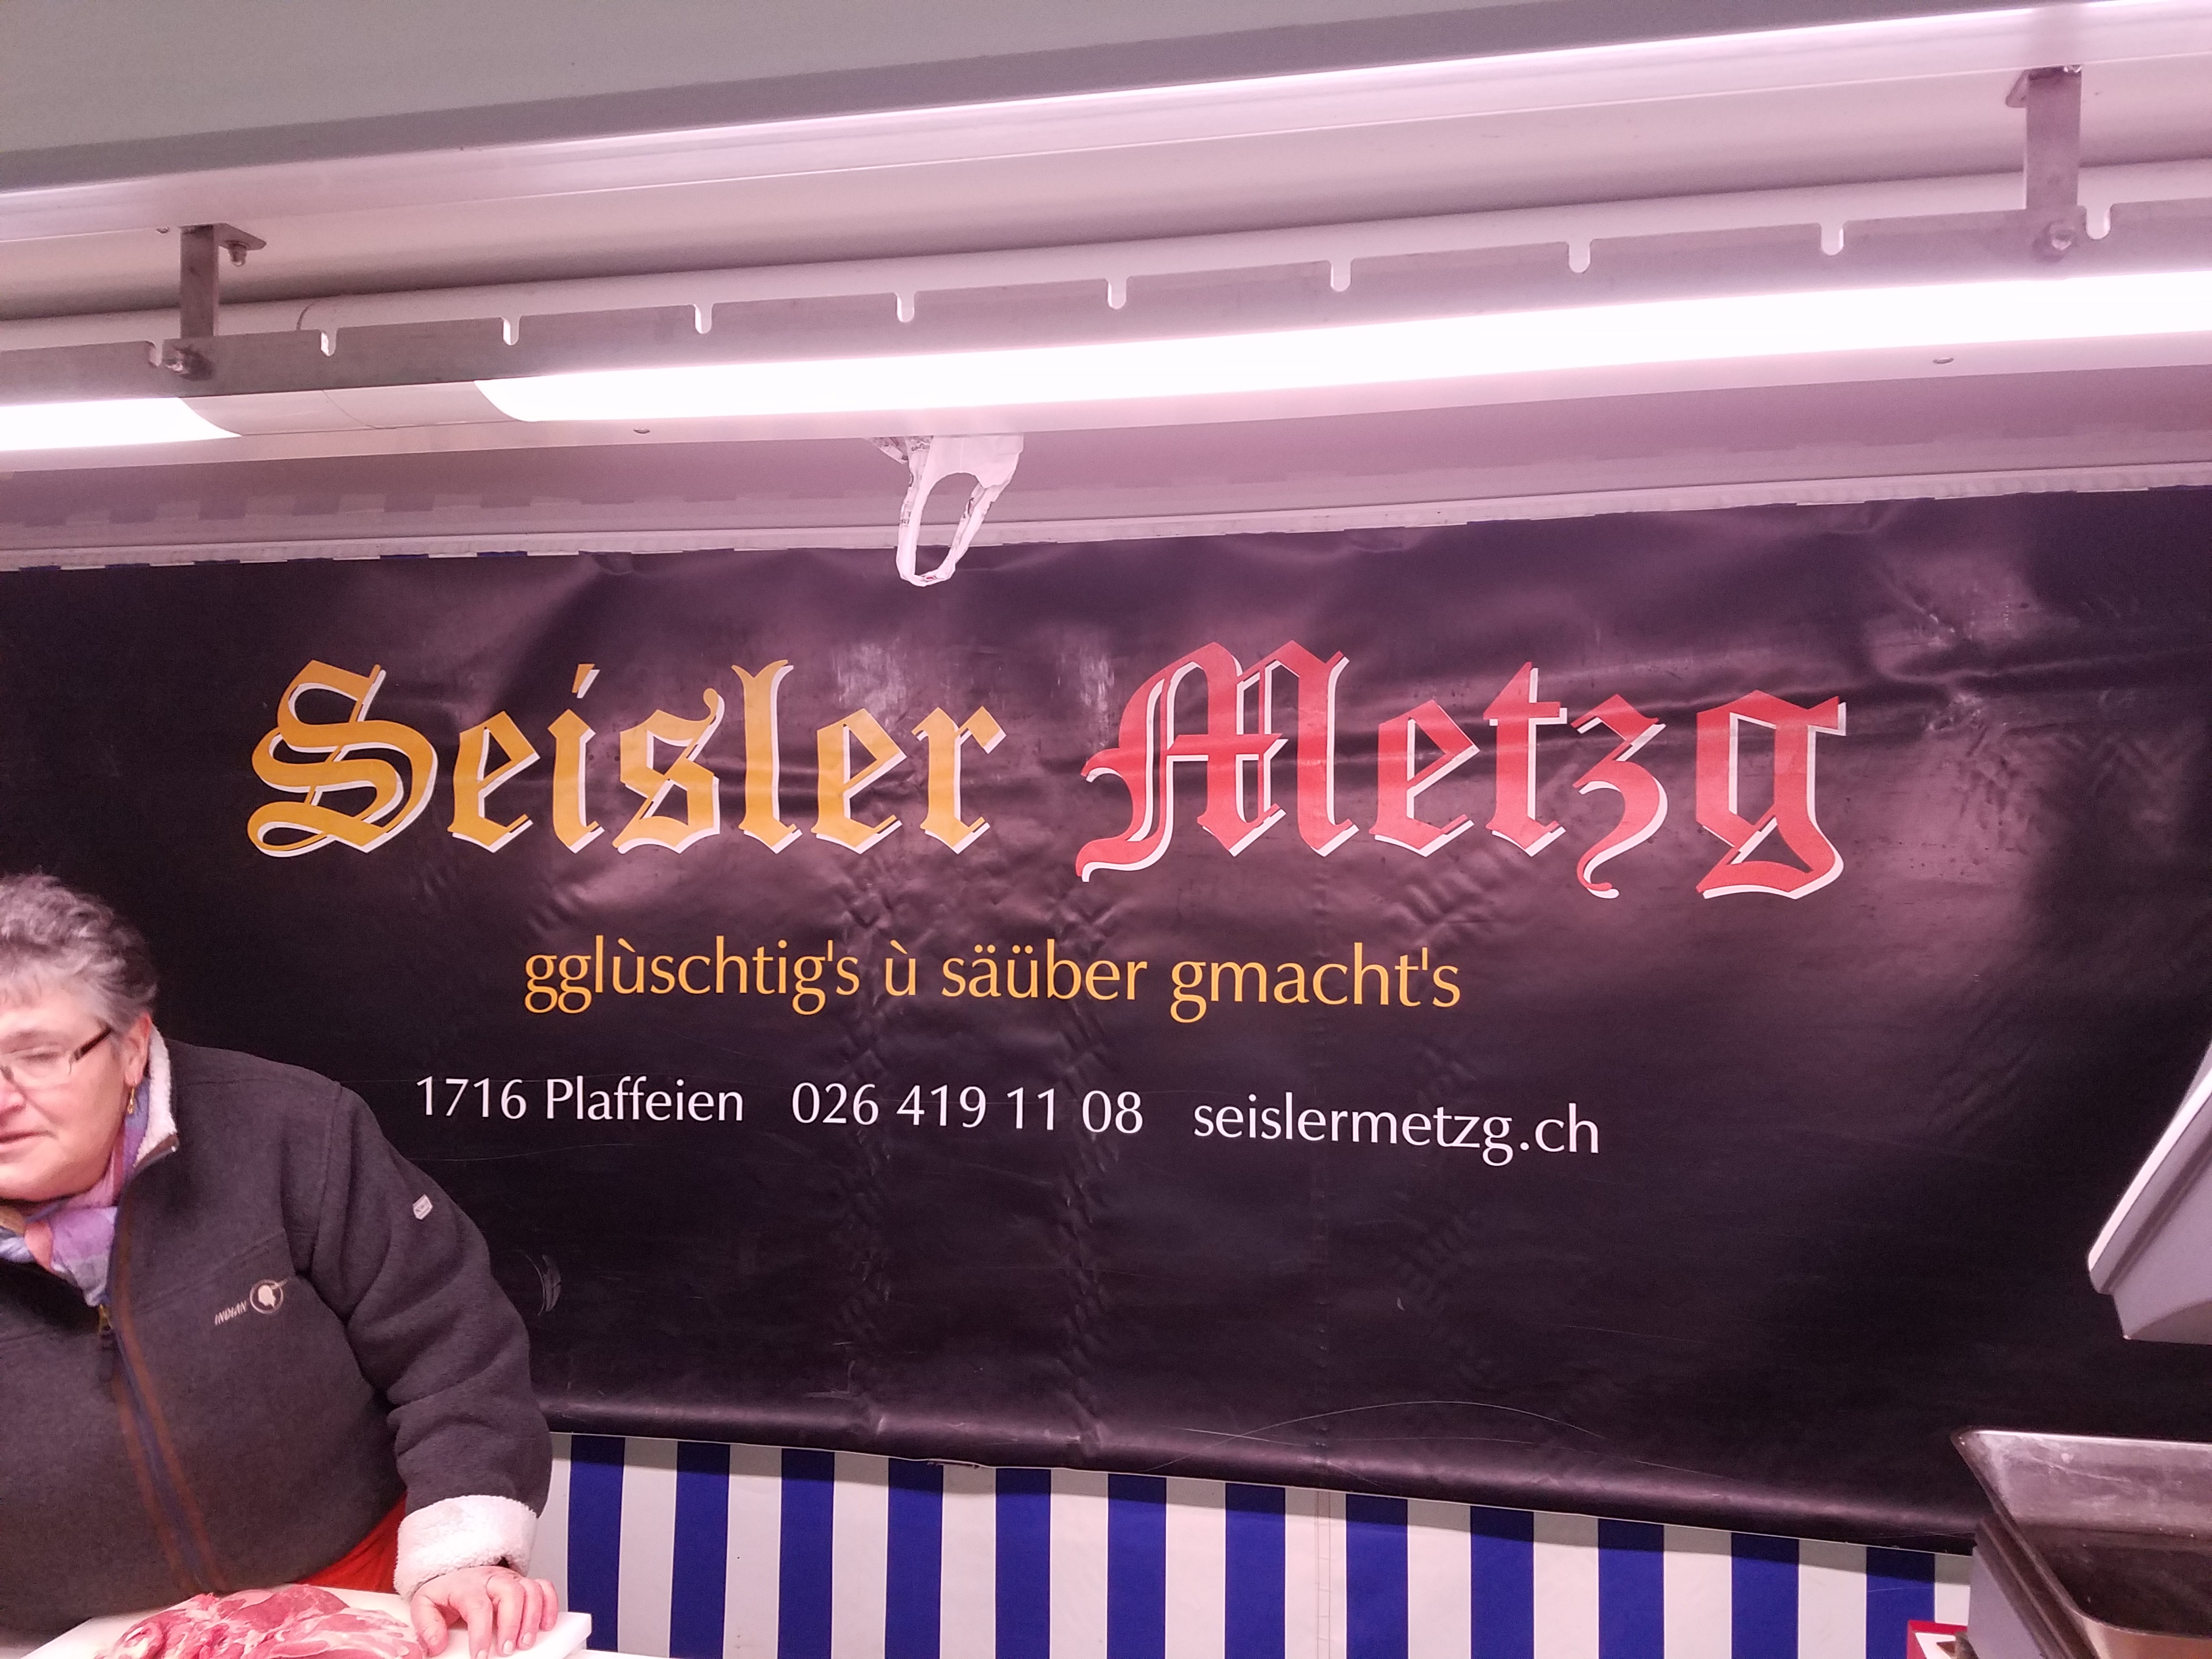 Swiss-German Butcher sign - Gamesforlanguage.com